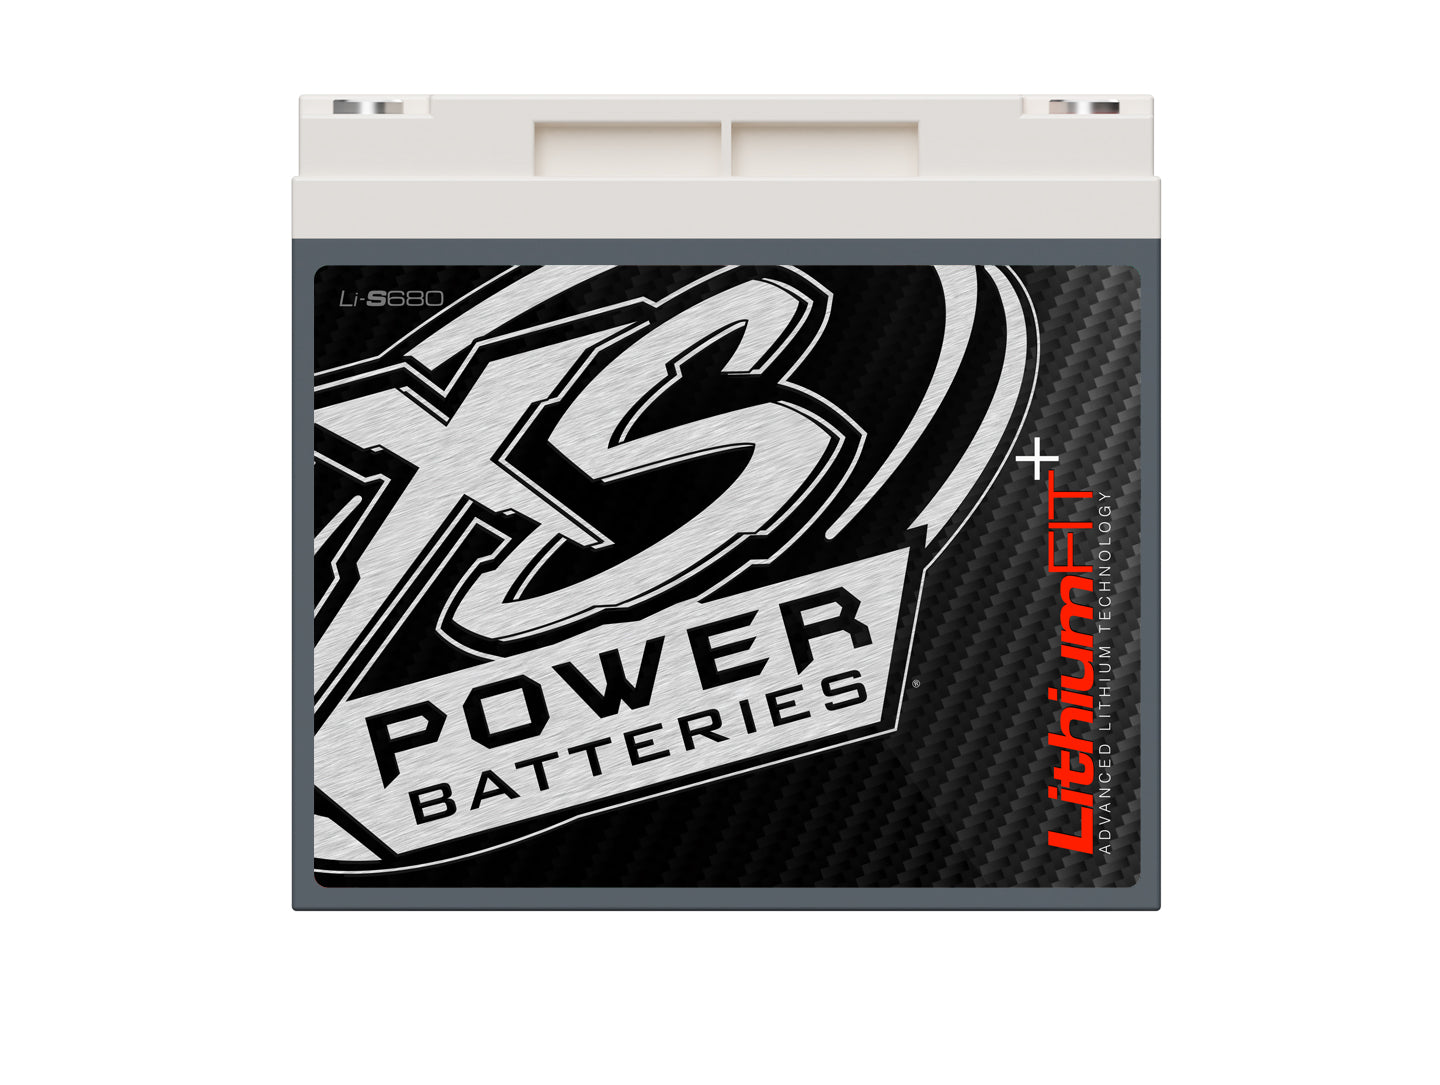 Li-S680 XS Power 12VDC Lithium Racing Vehicle Battery 1440A 15.6Ah